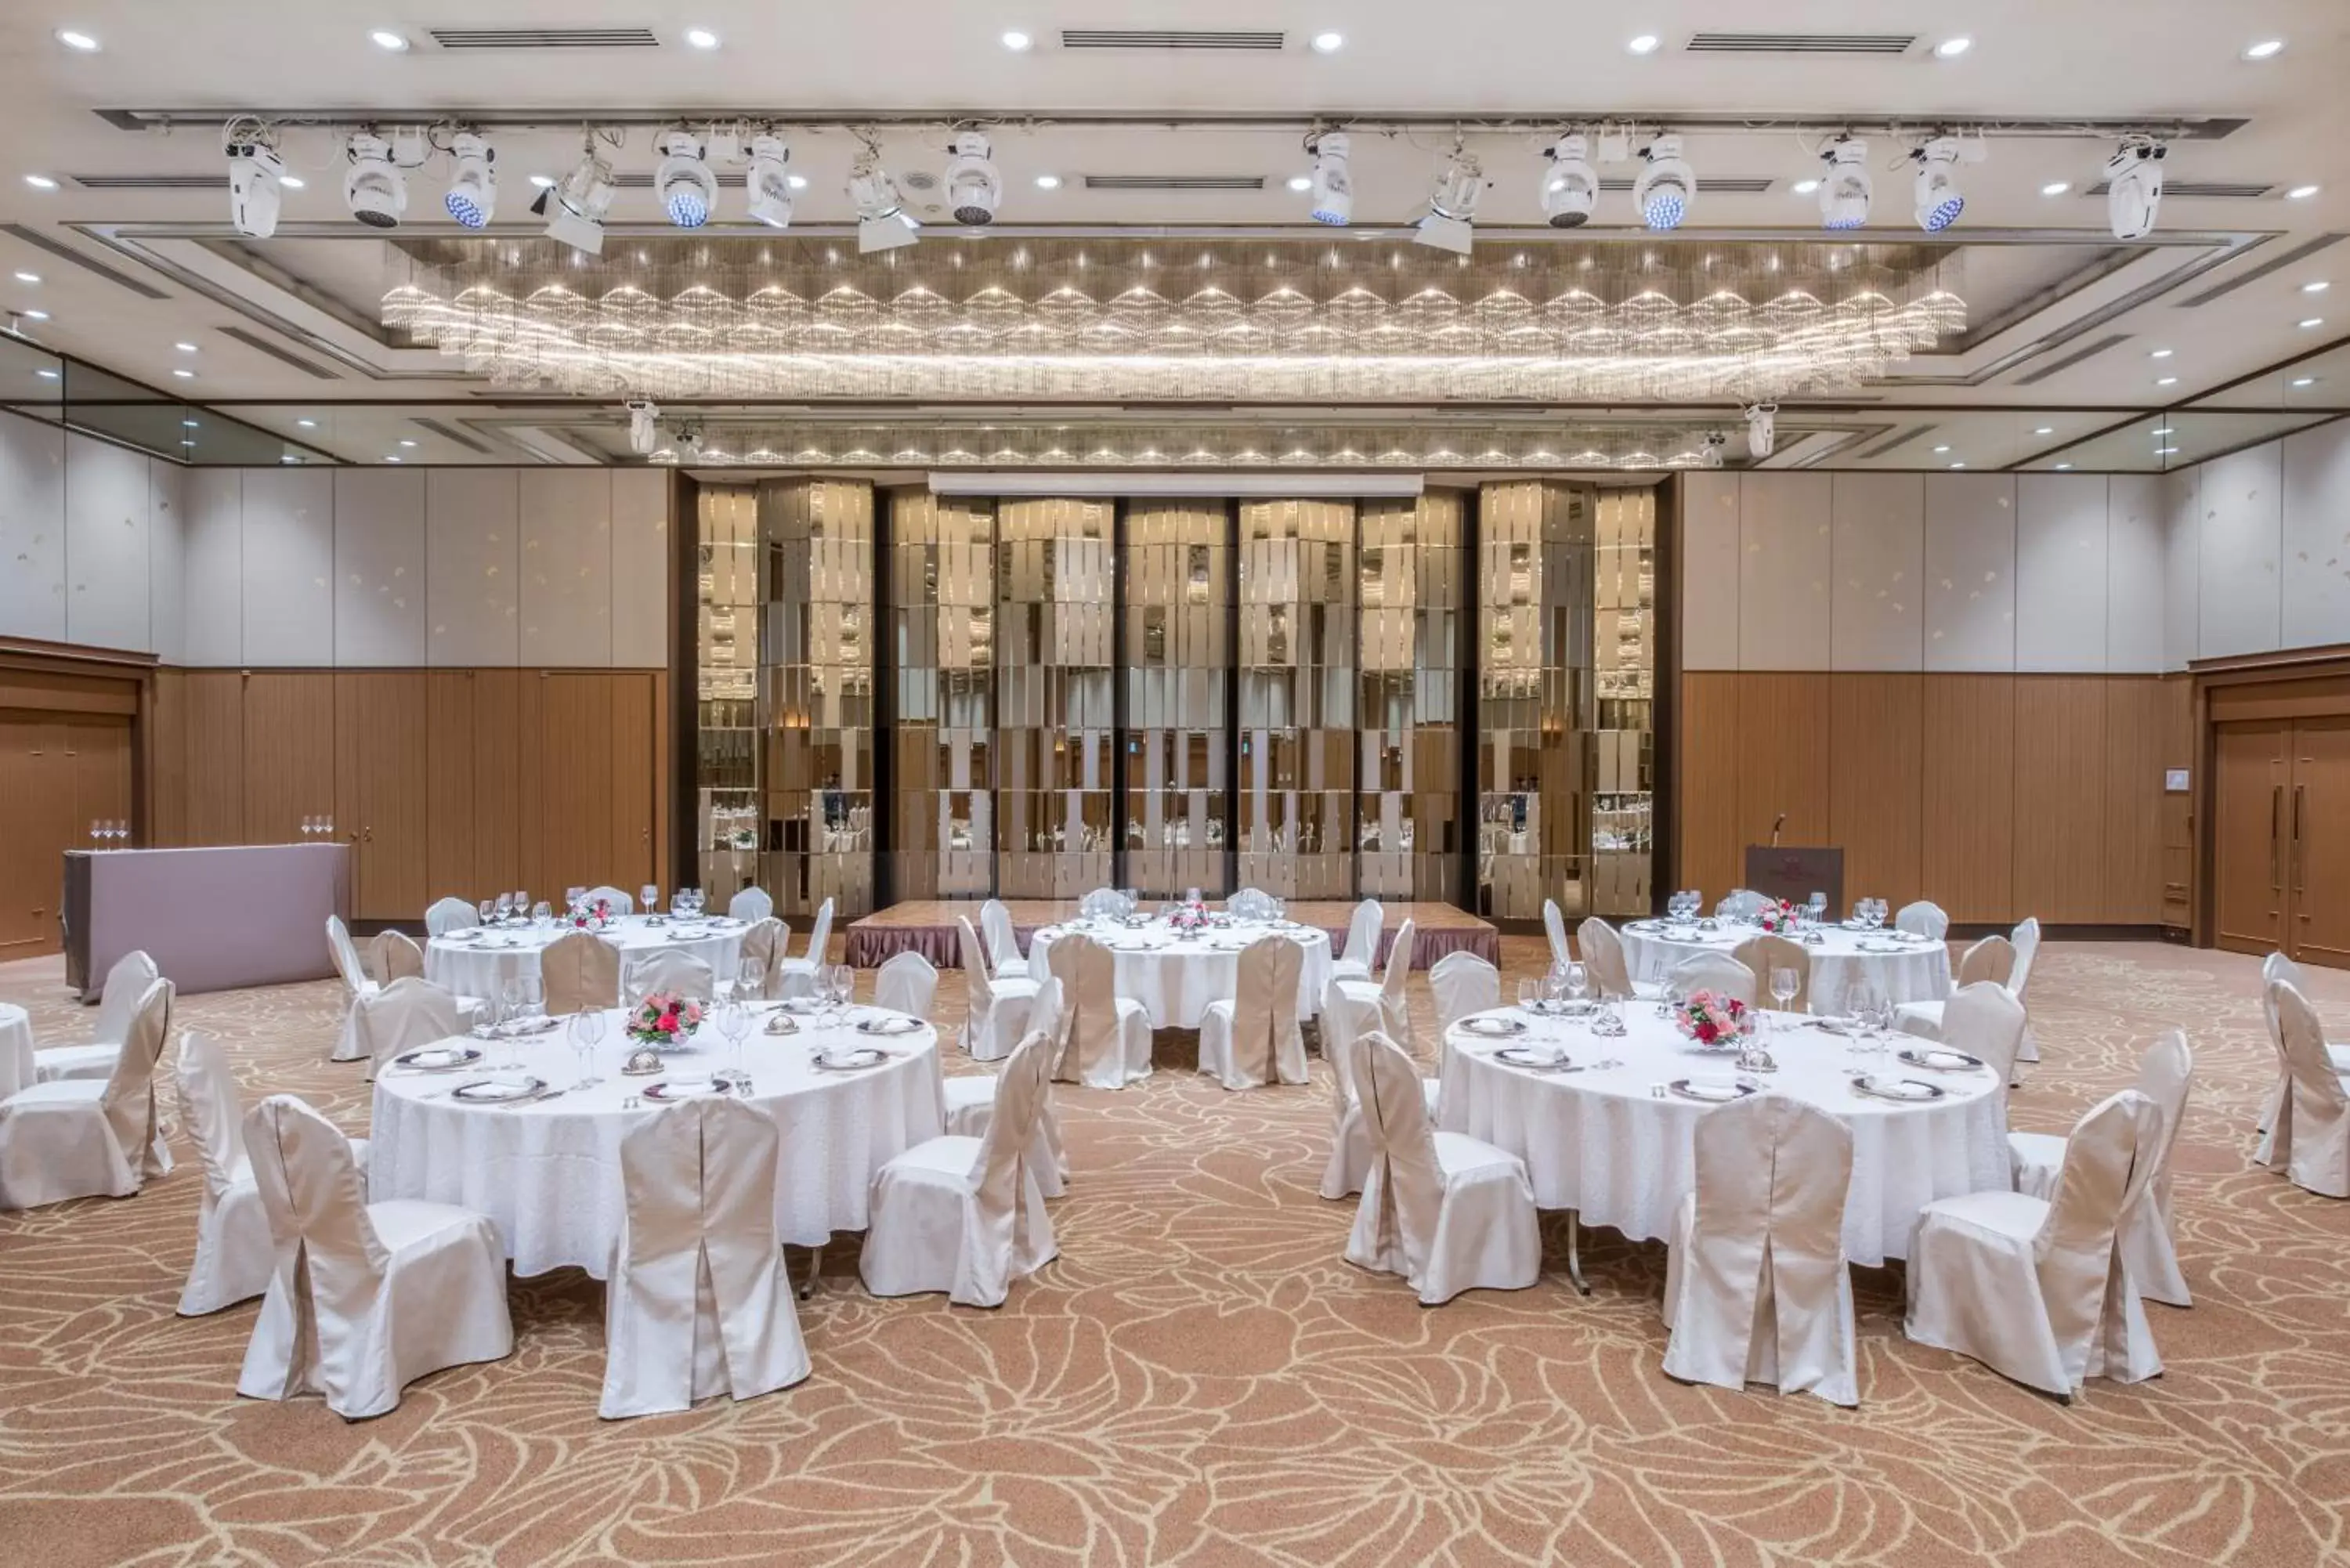 Banquet/Function facilities, Banquet Facilities in ANA Crowne Plaza Kanazawa, an IHG Hotel